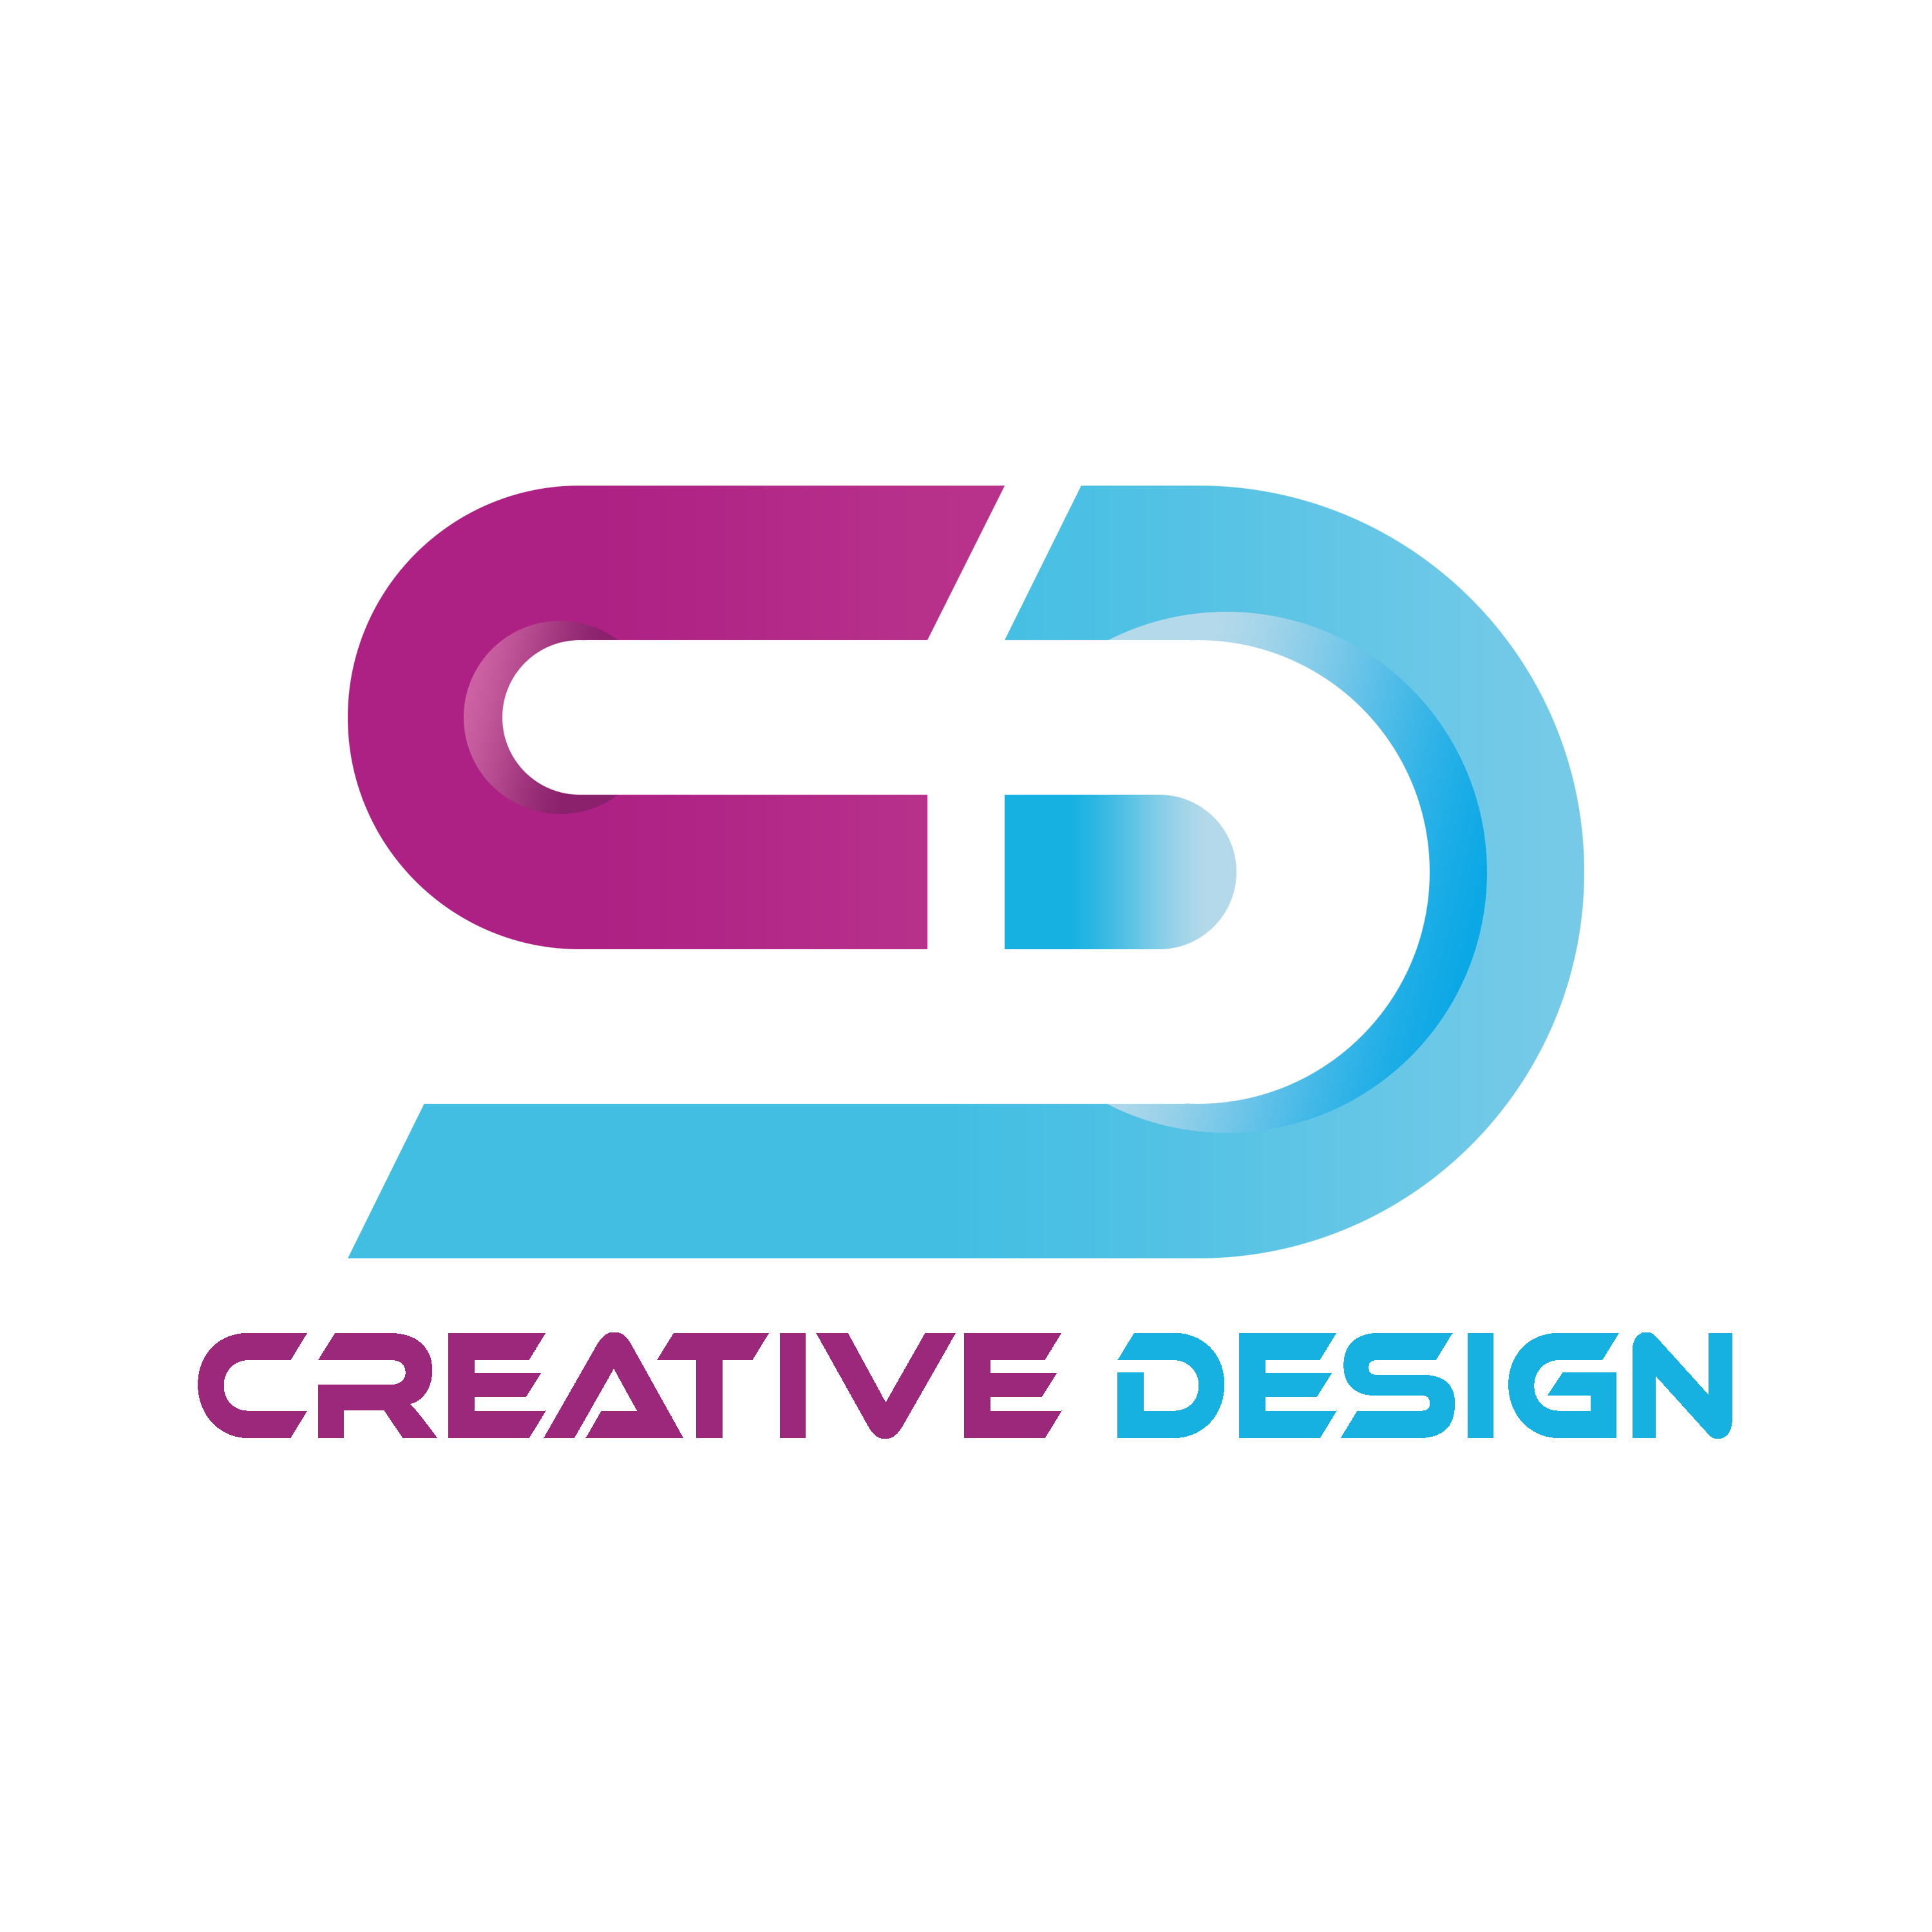 Typographic Logo Design